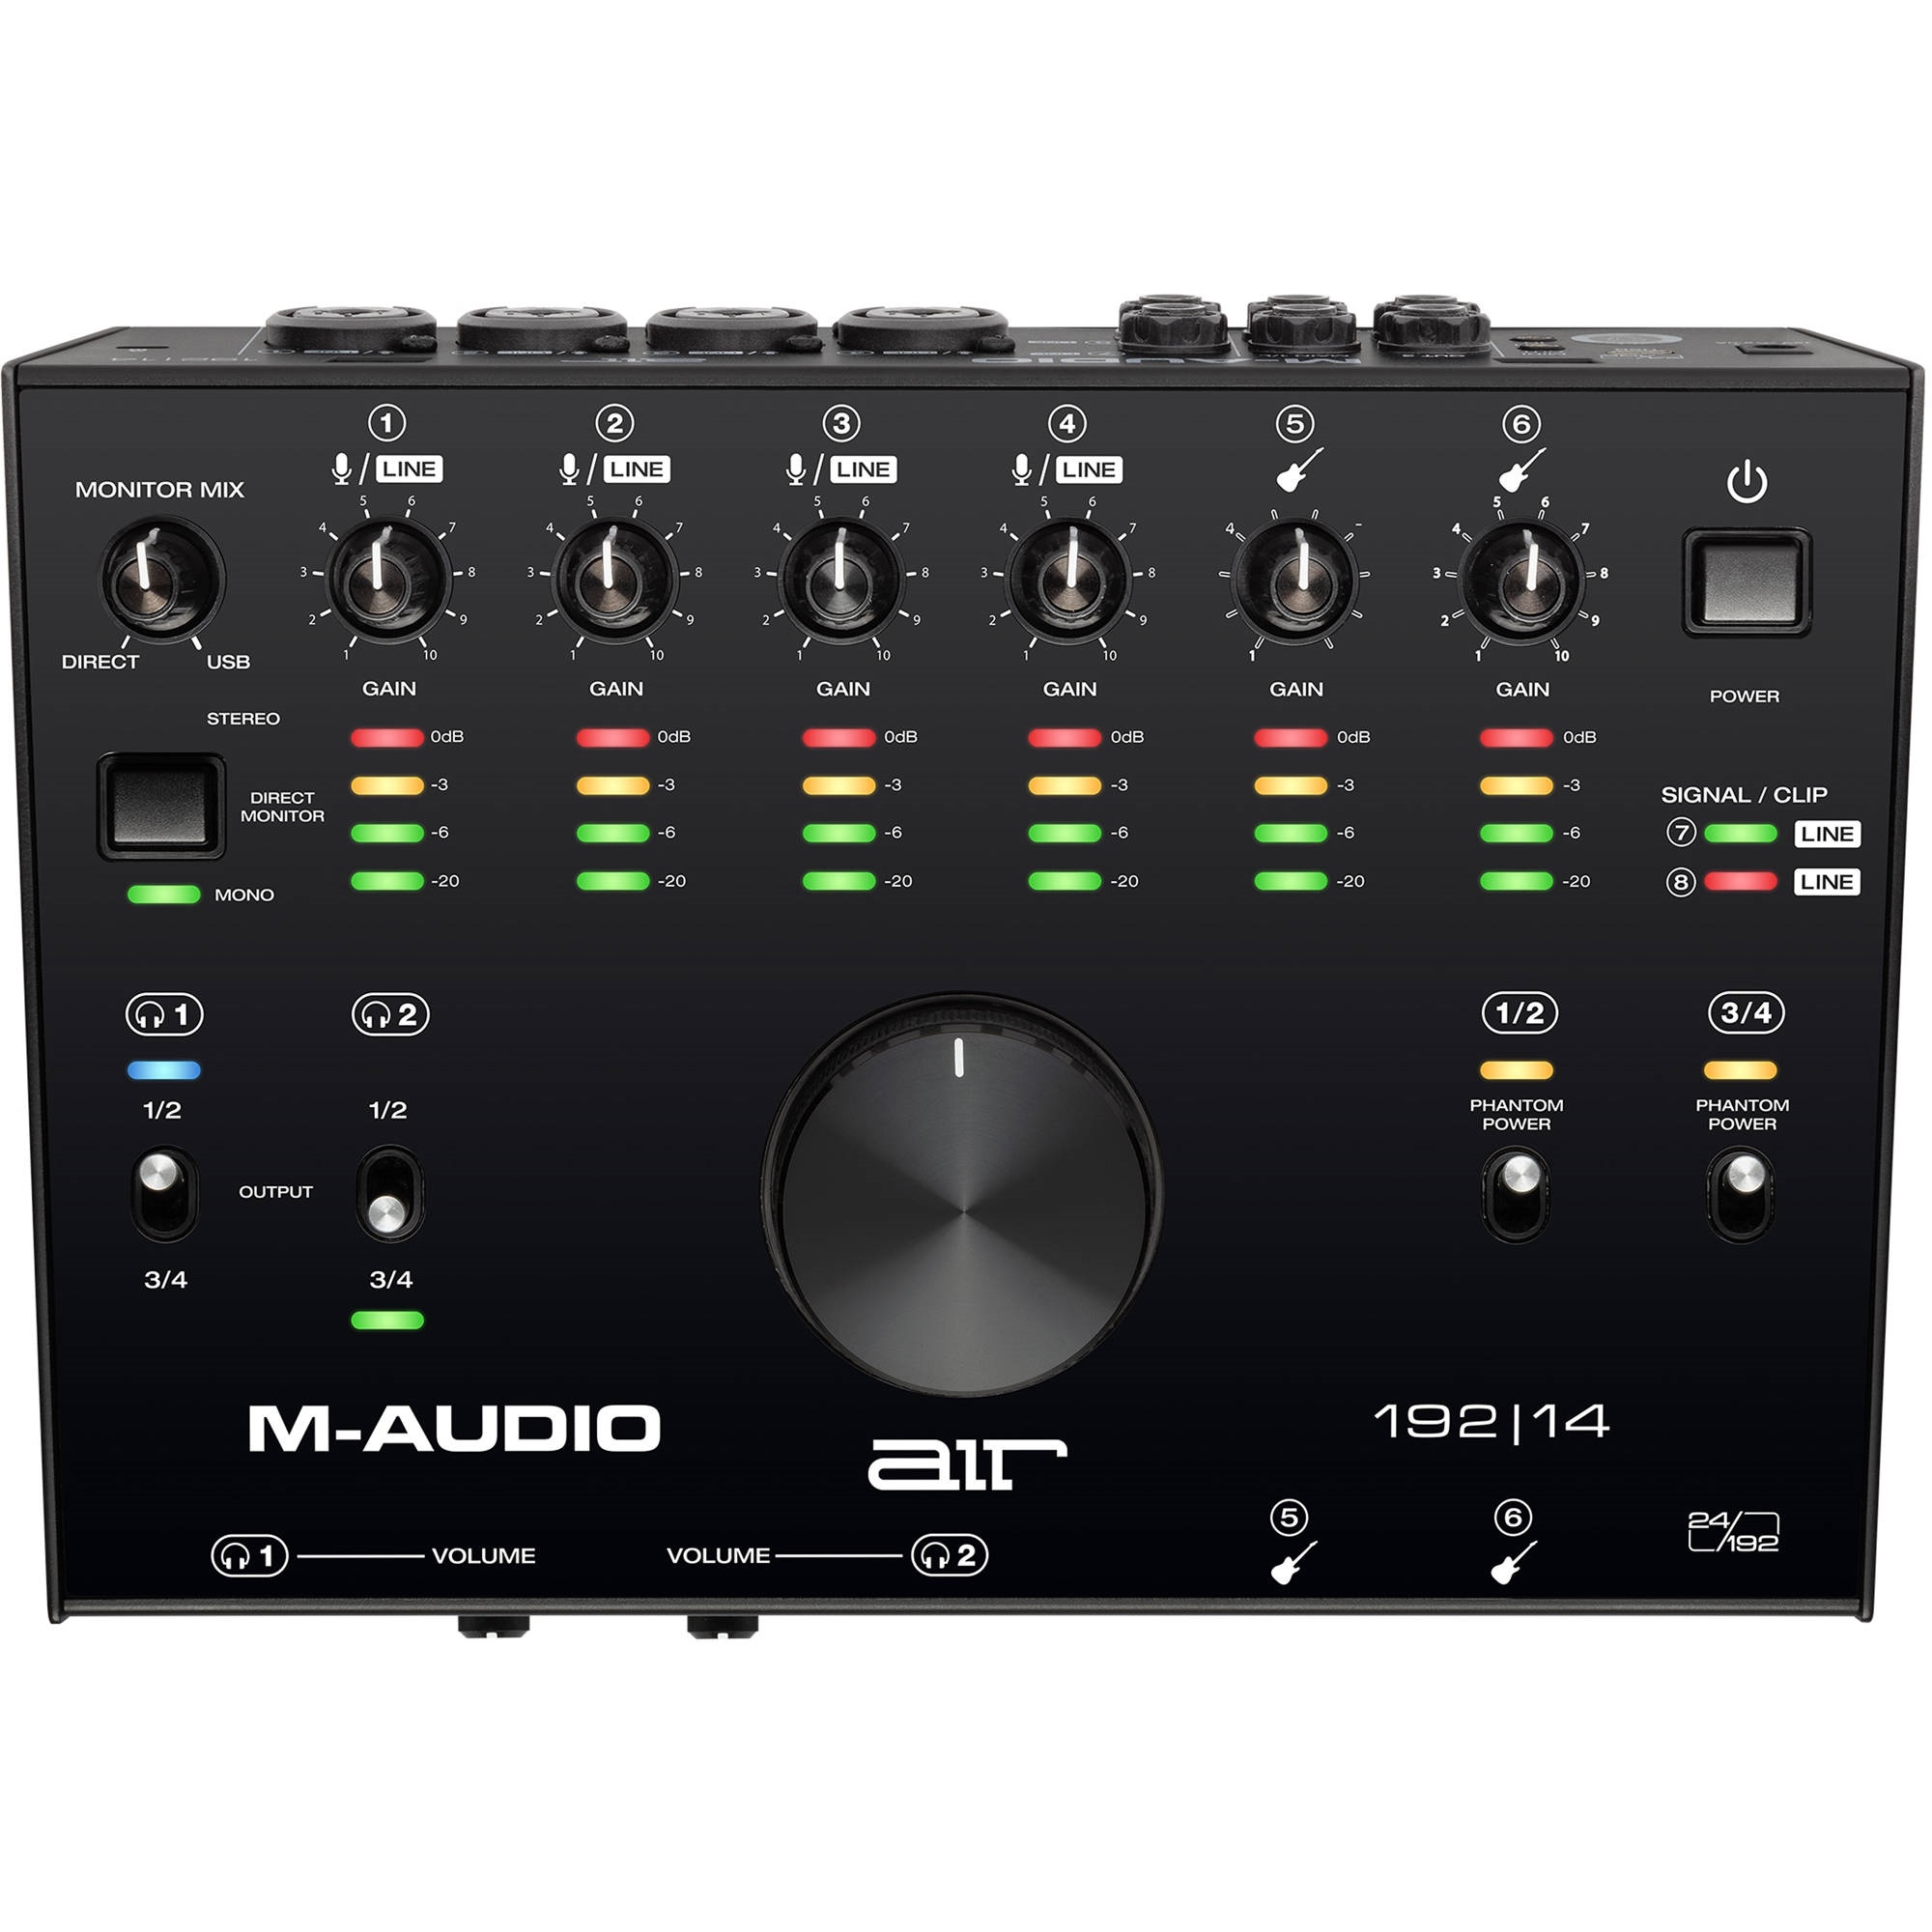 M-Audio AIR 192 14 Desktop 8x4 USB Type-C Audio Interface